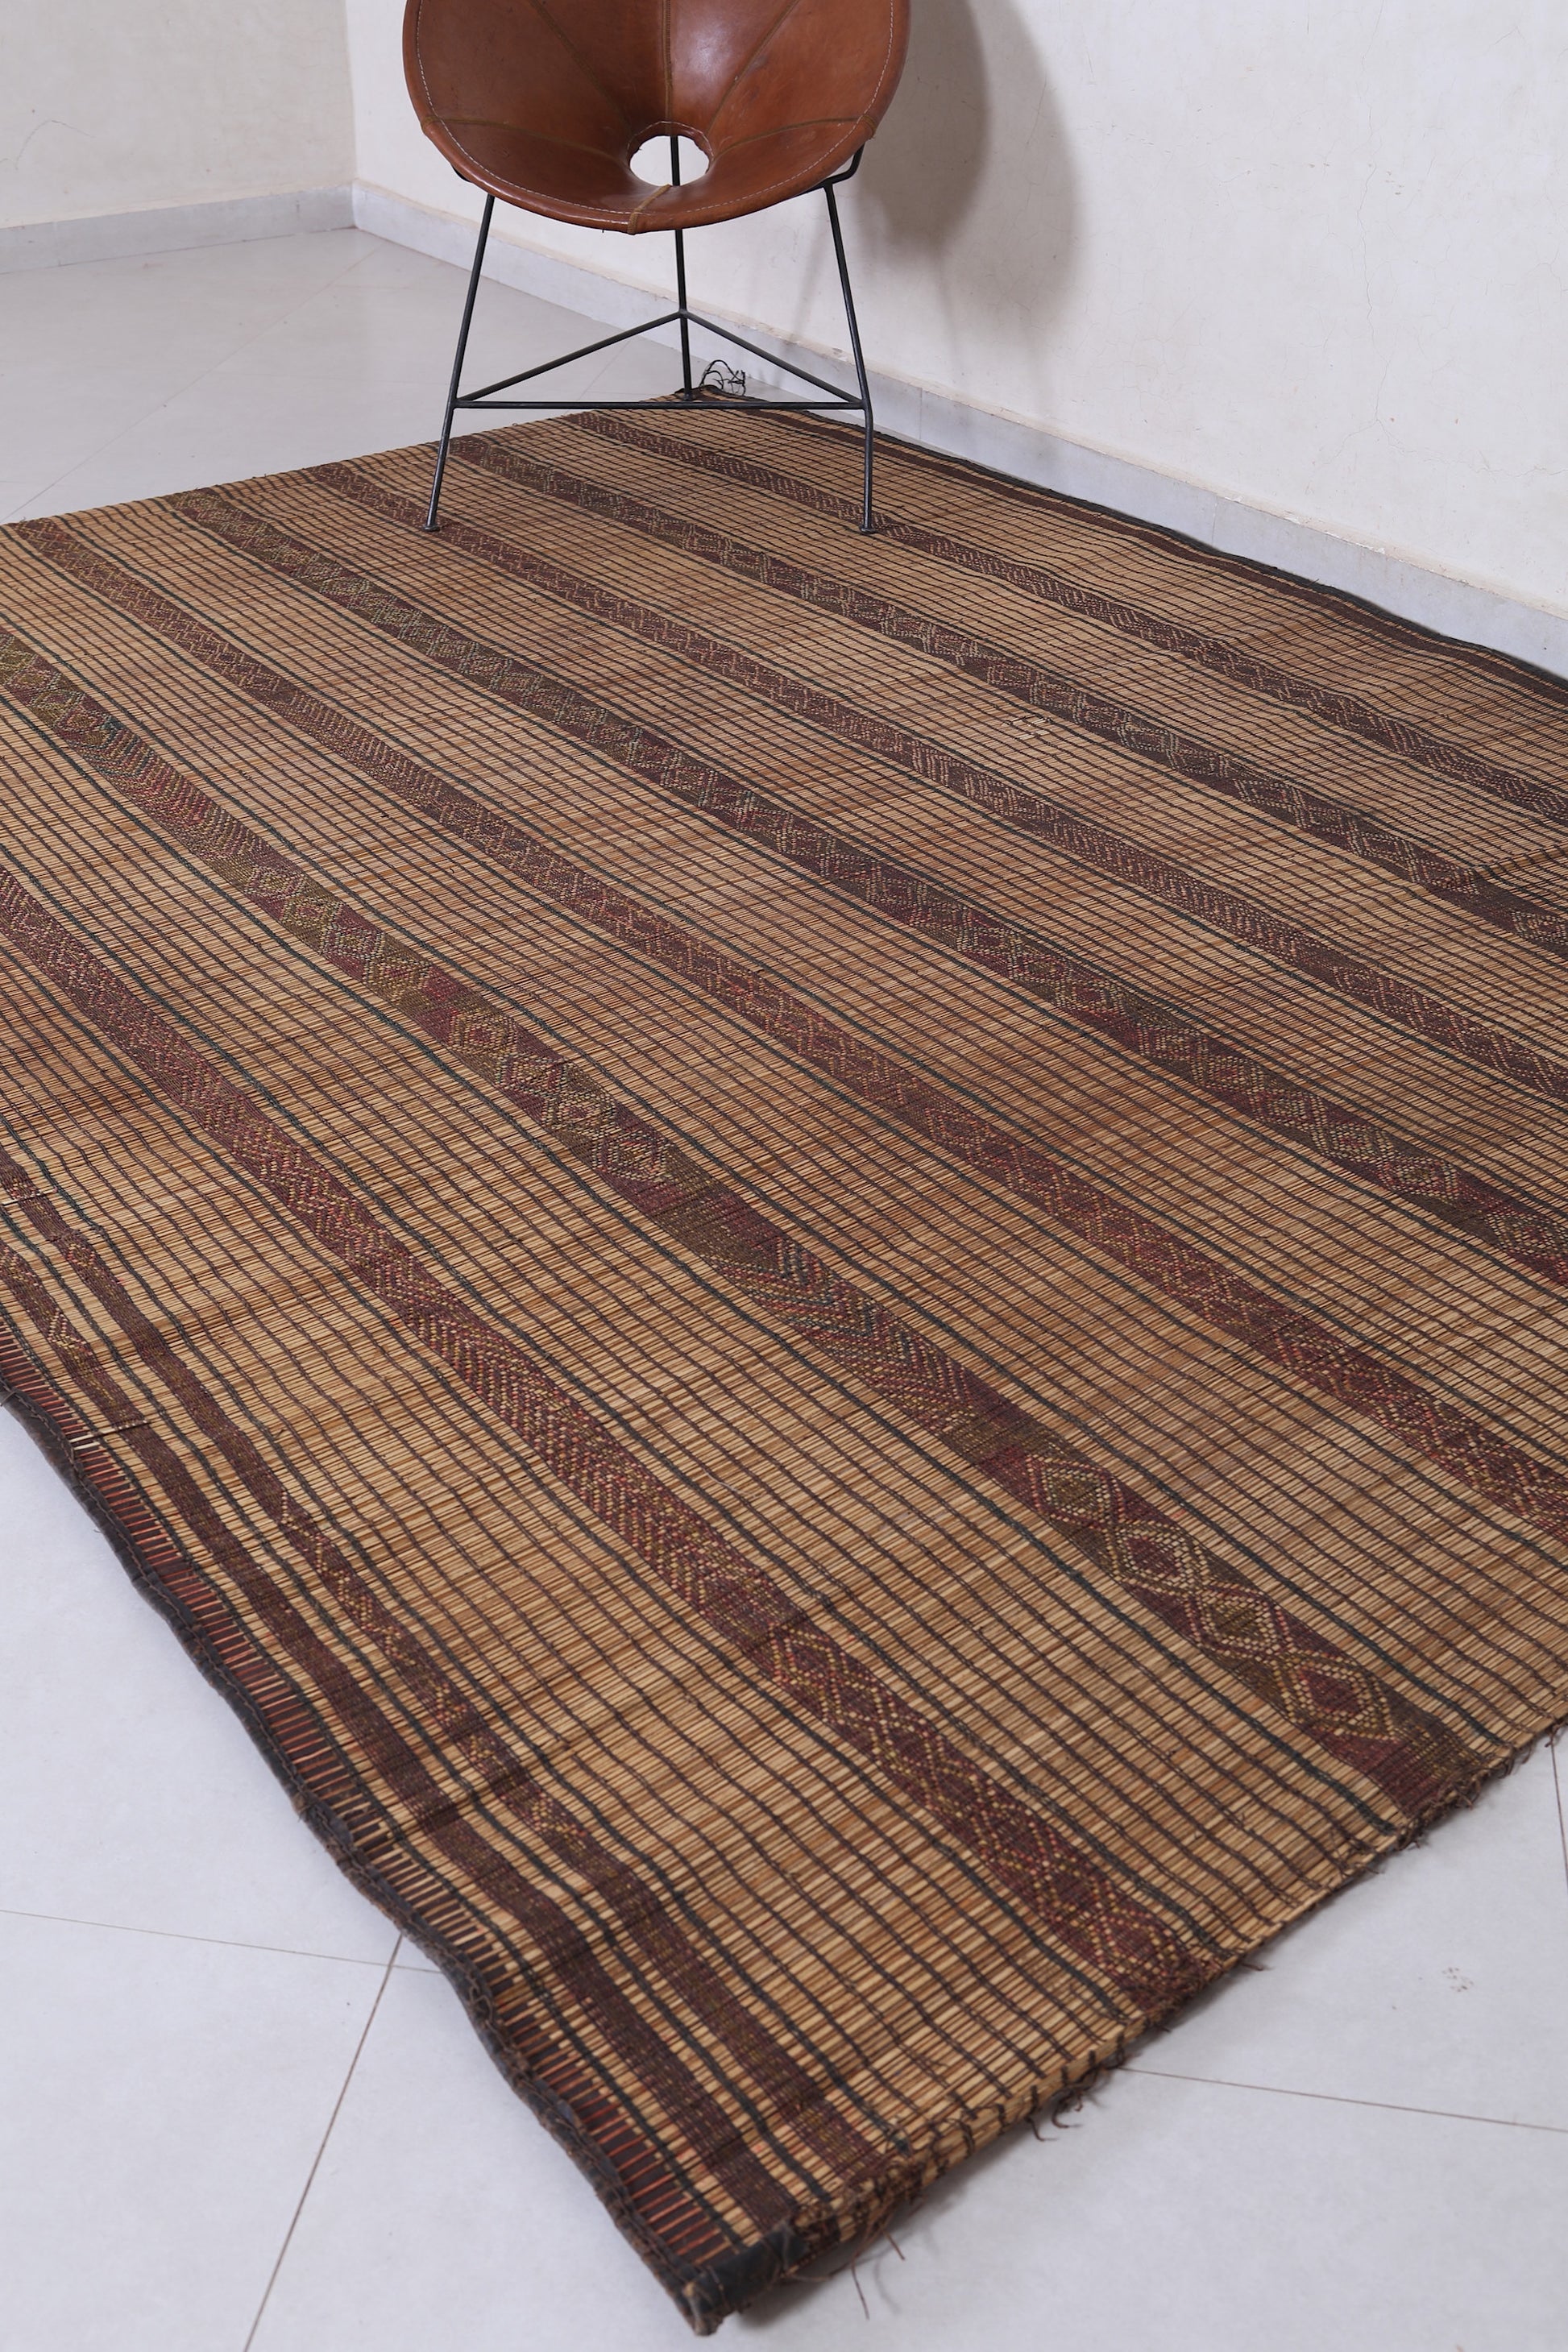 Moroccan African Tuareg rug 6.1 X 8.4 Feet